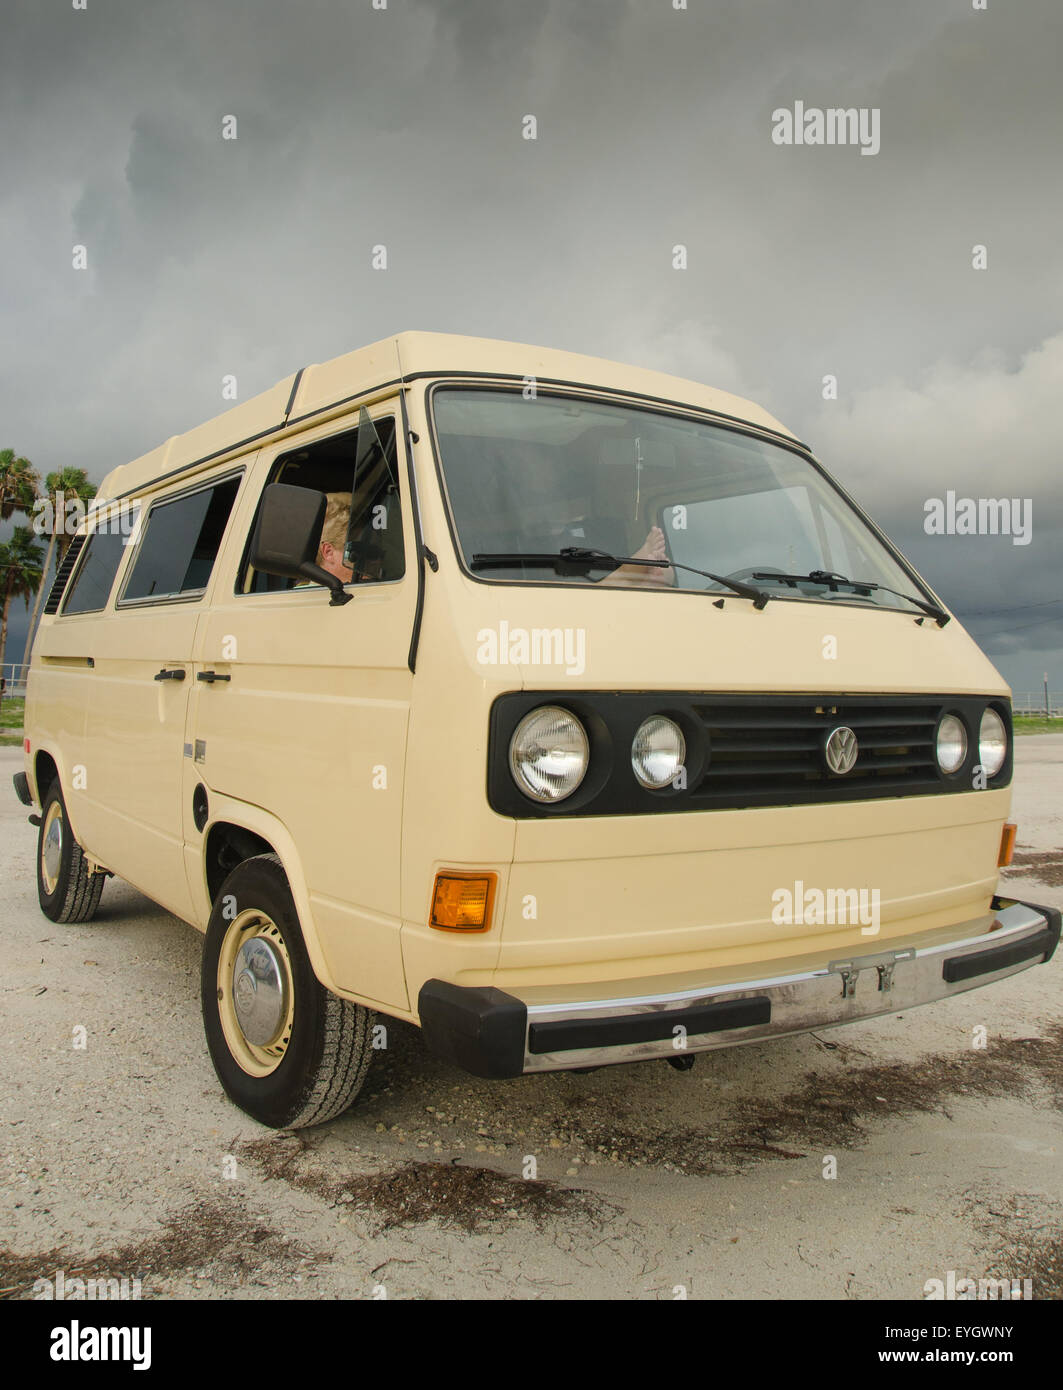 Volkswagen westfalia camper hi-res stock photography and images - Alamy